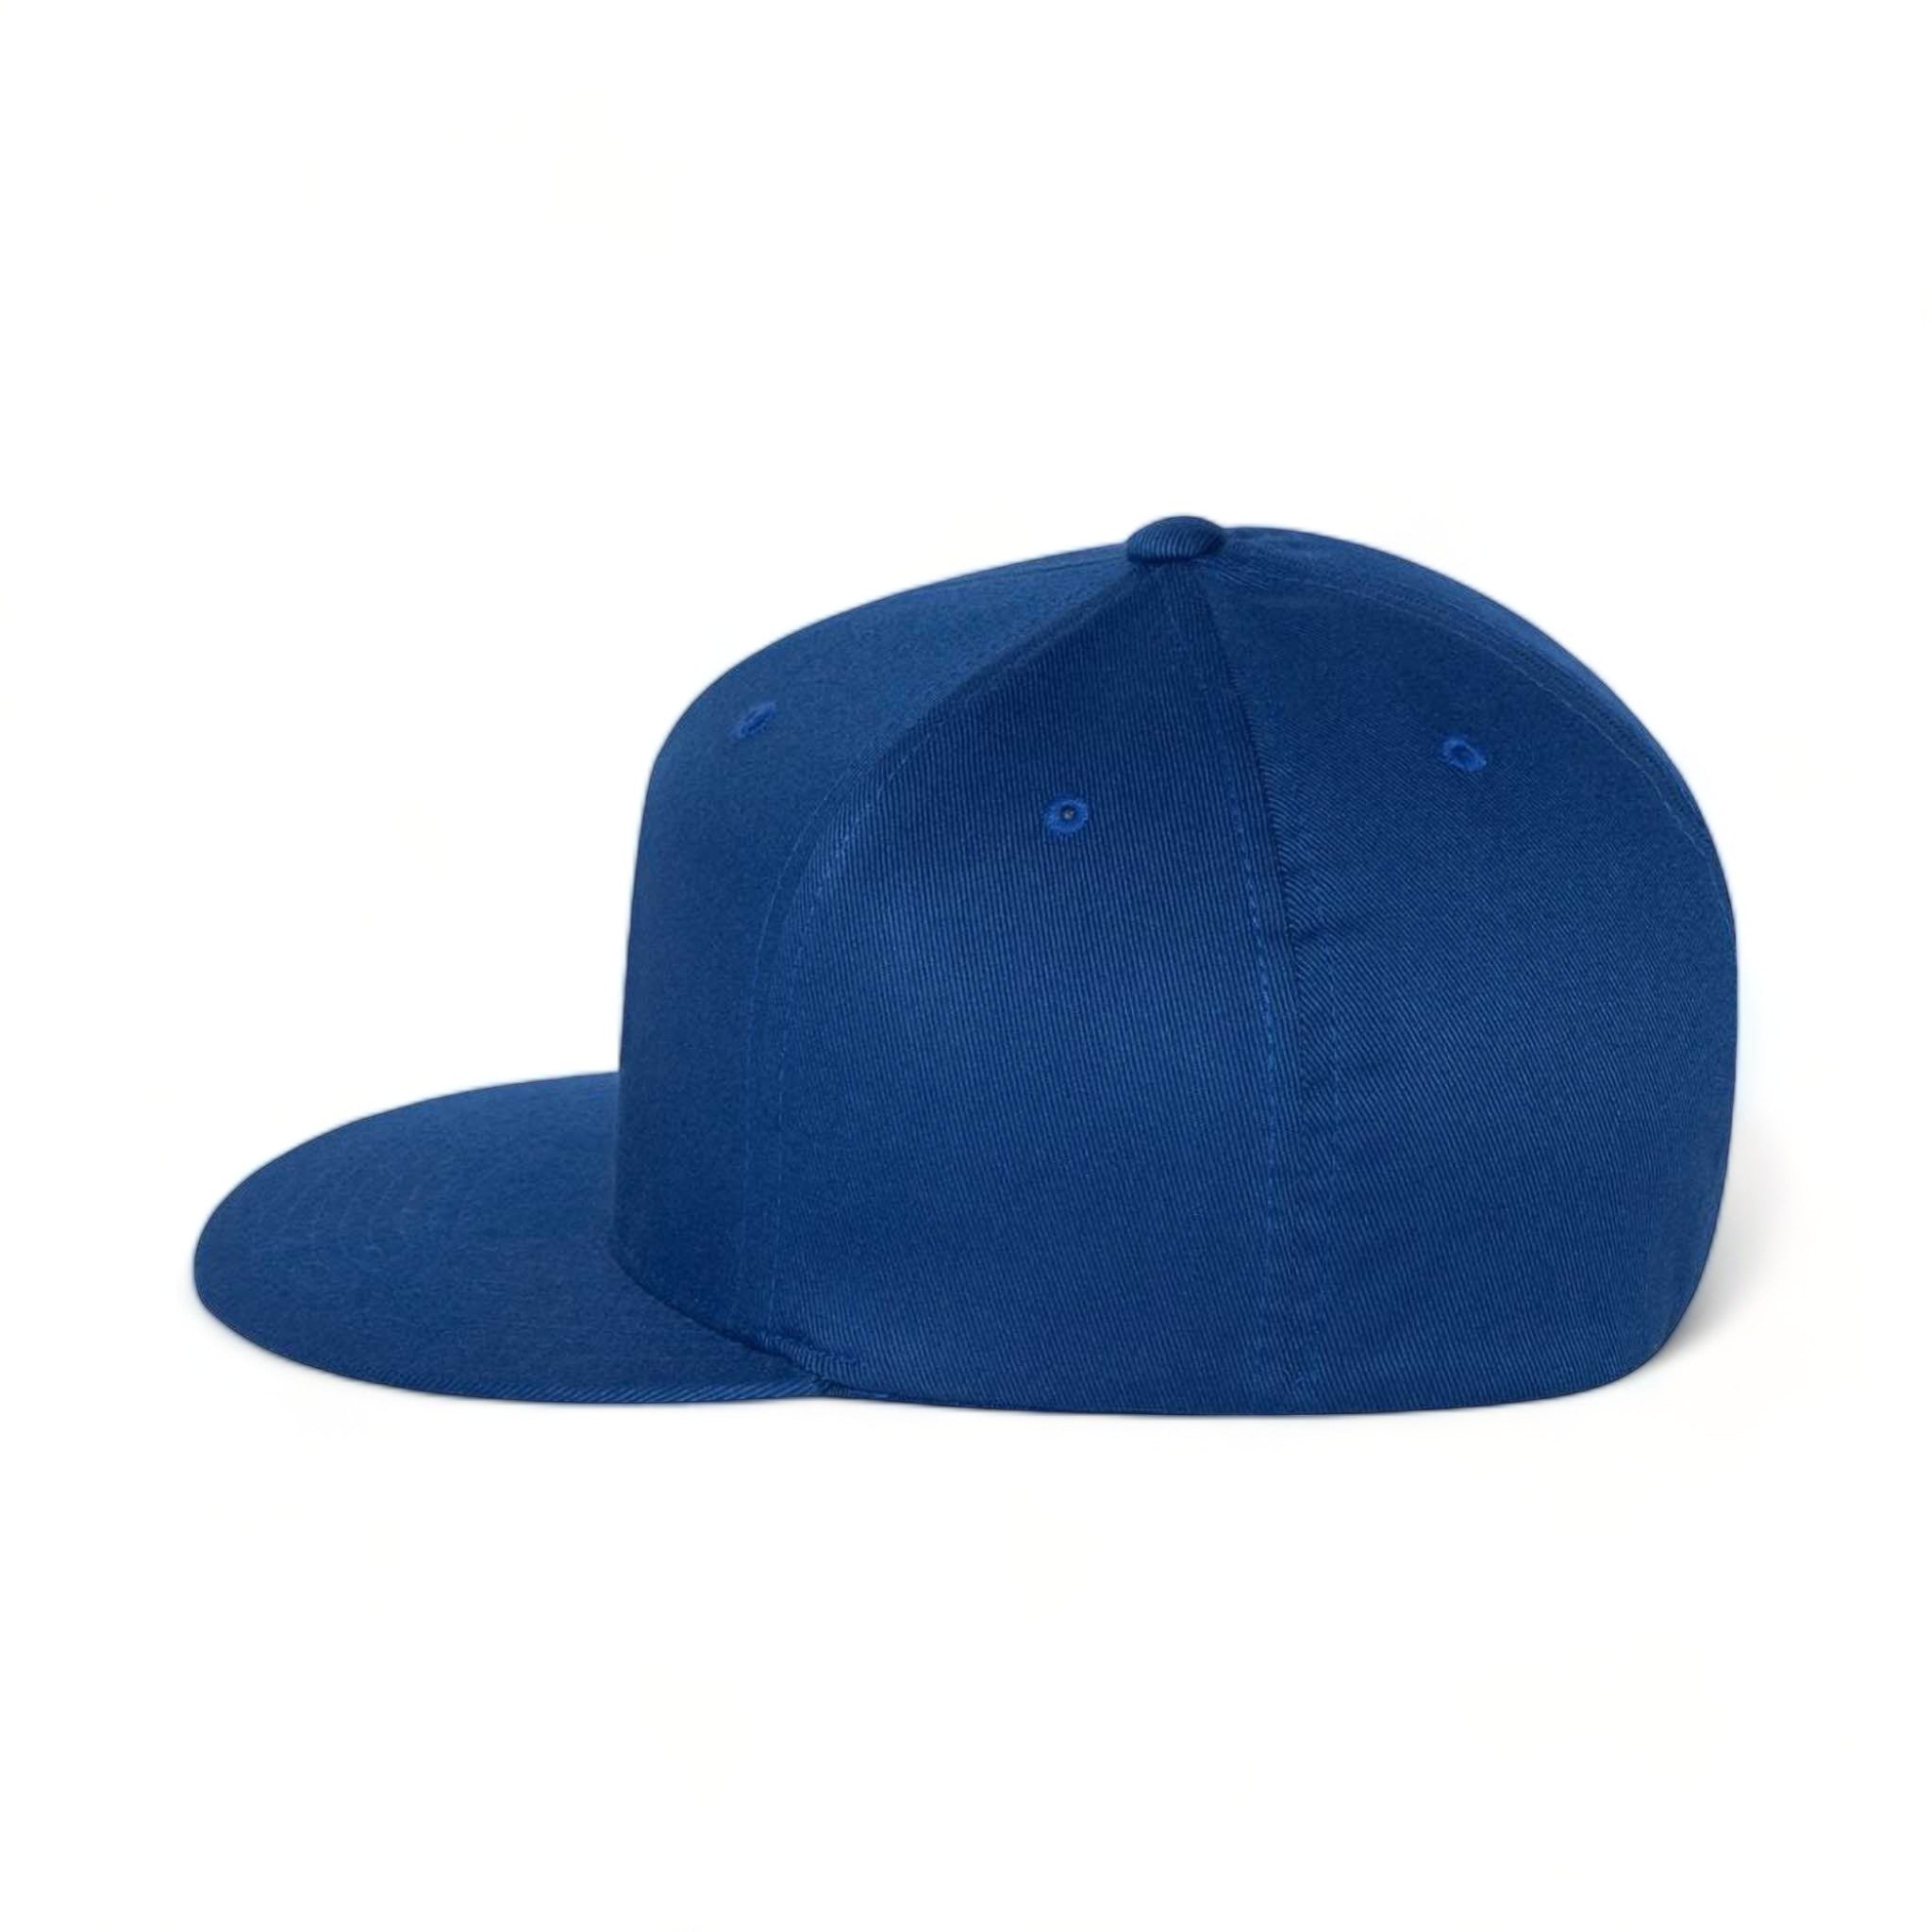 Side view of Flexfit 6297f custom hat in royal blue